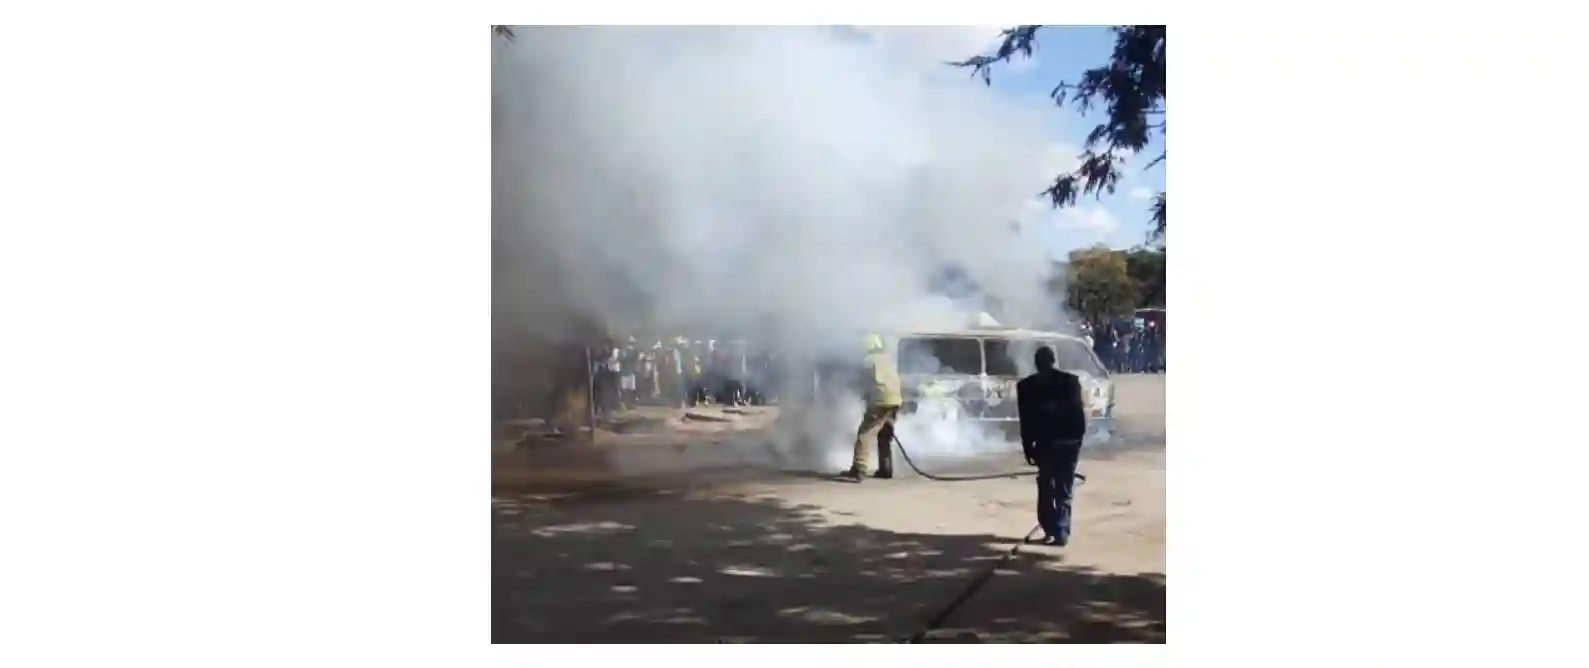 Police Tear Gas Burn 2 Pirating Kombis To Ashes